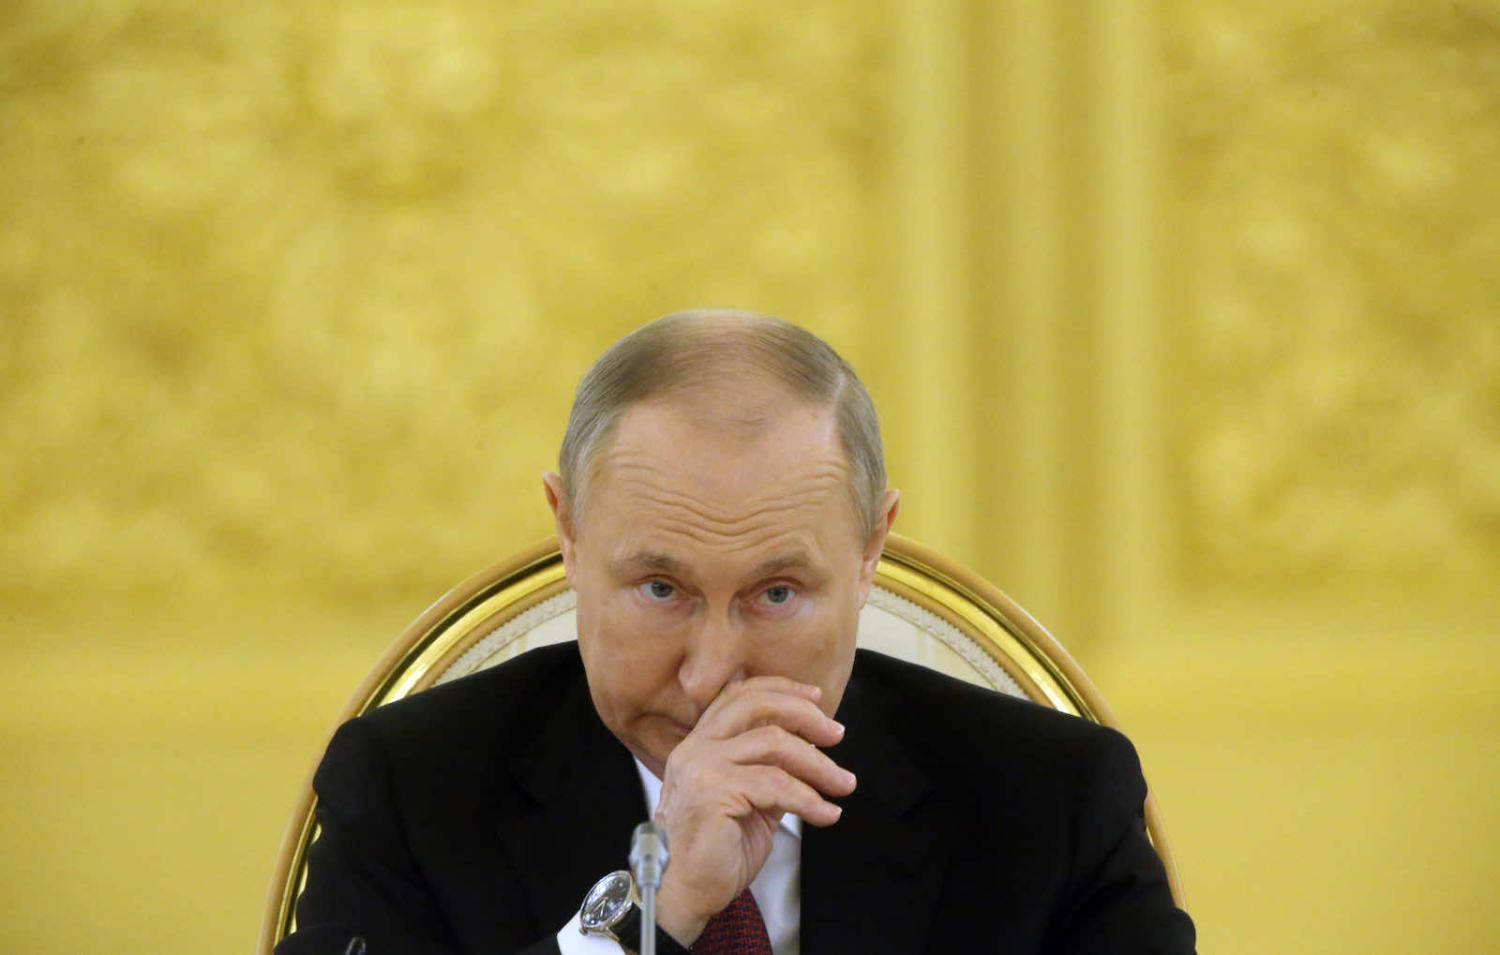 Vladimir Putin Against A Blurry Gold Background Wallpaper